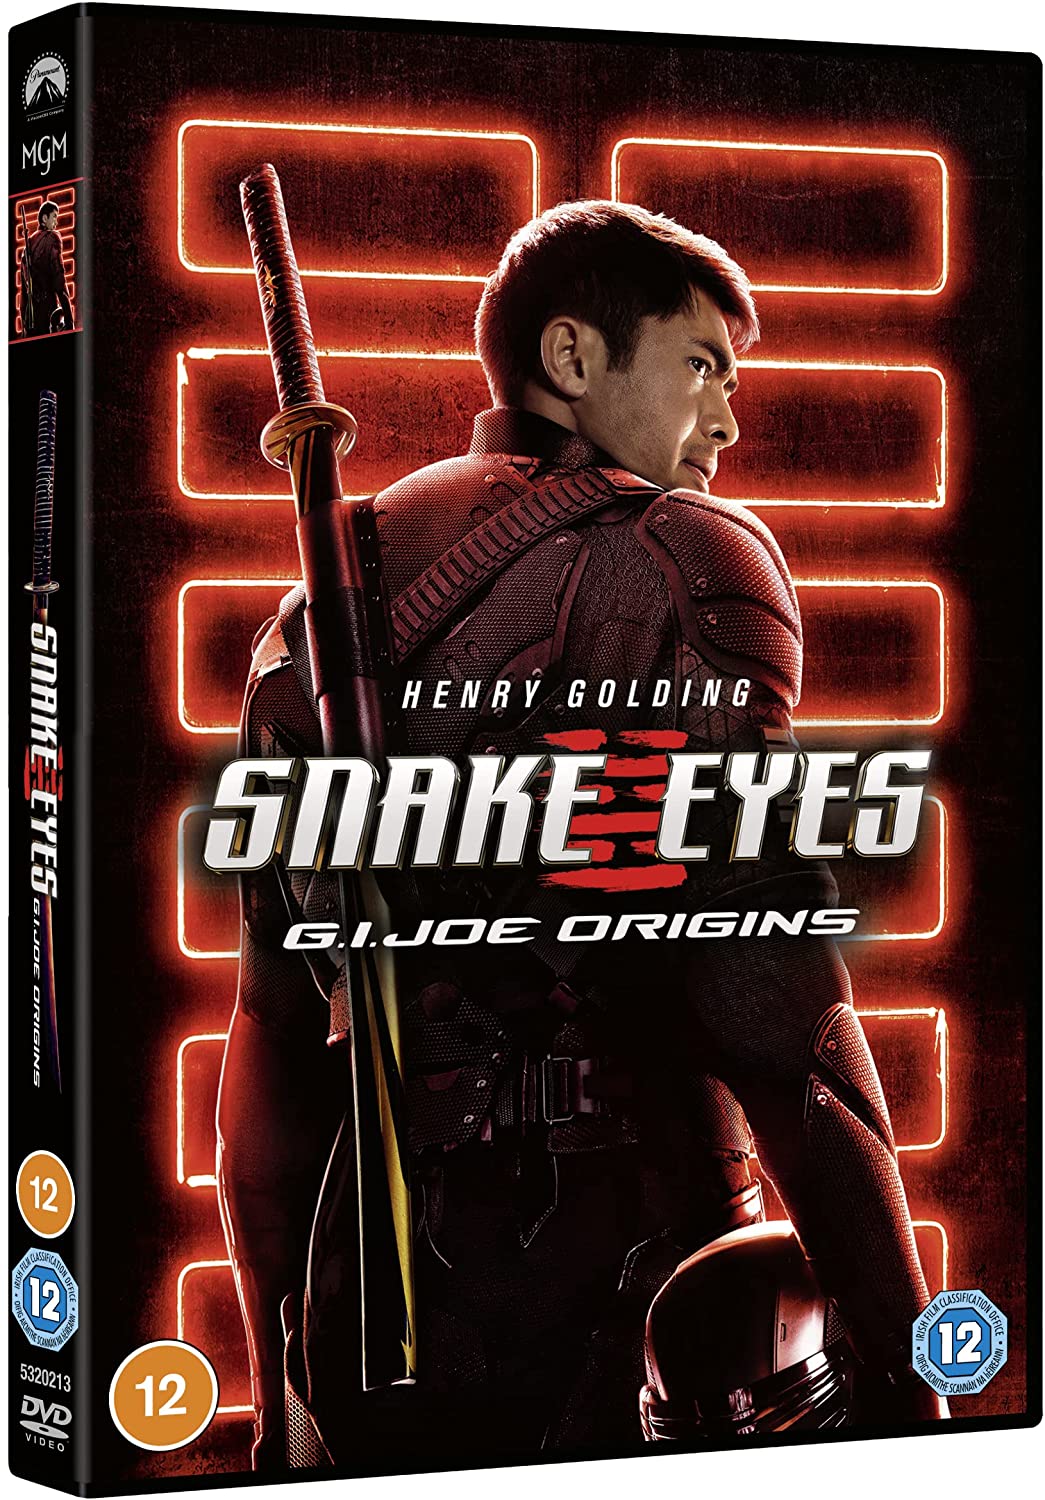 GI Joe (2020) Snake Eyes [2021] - Action/Adventure [DVD]